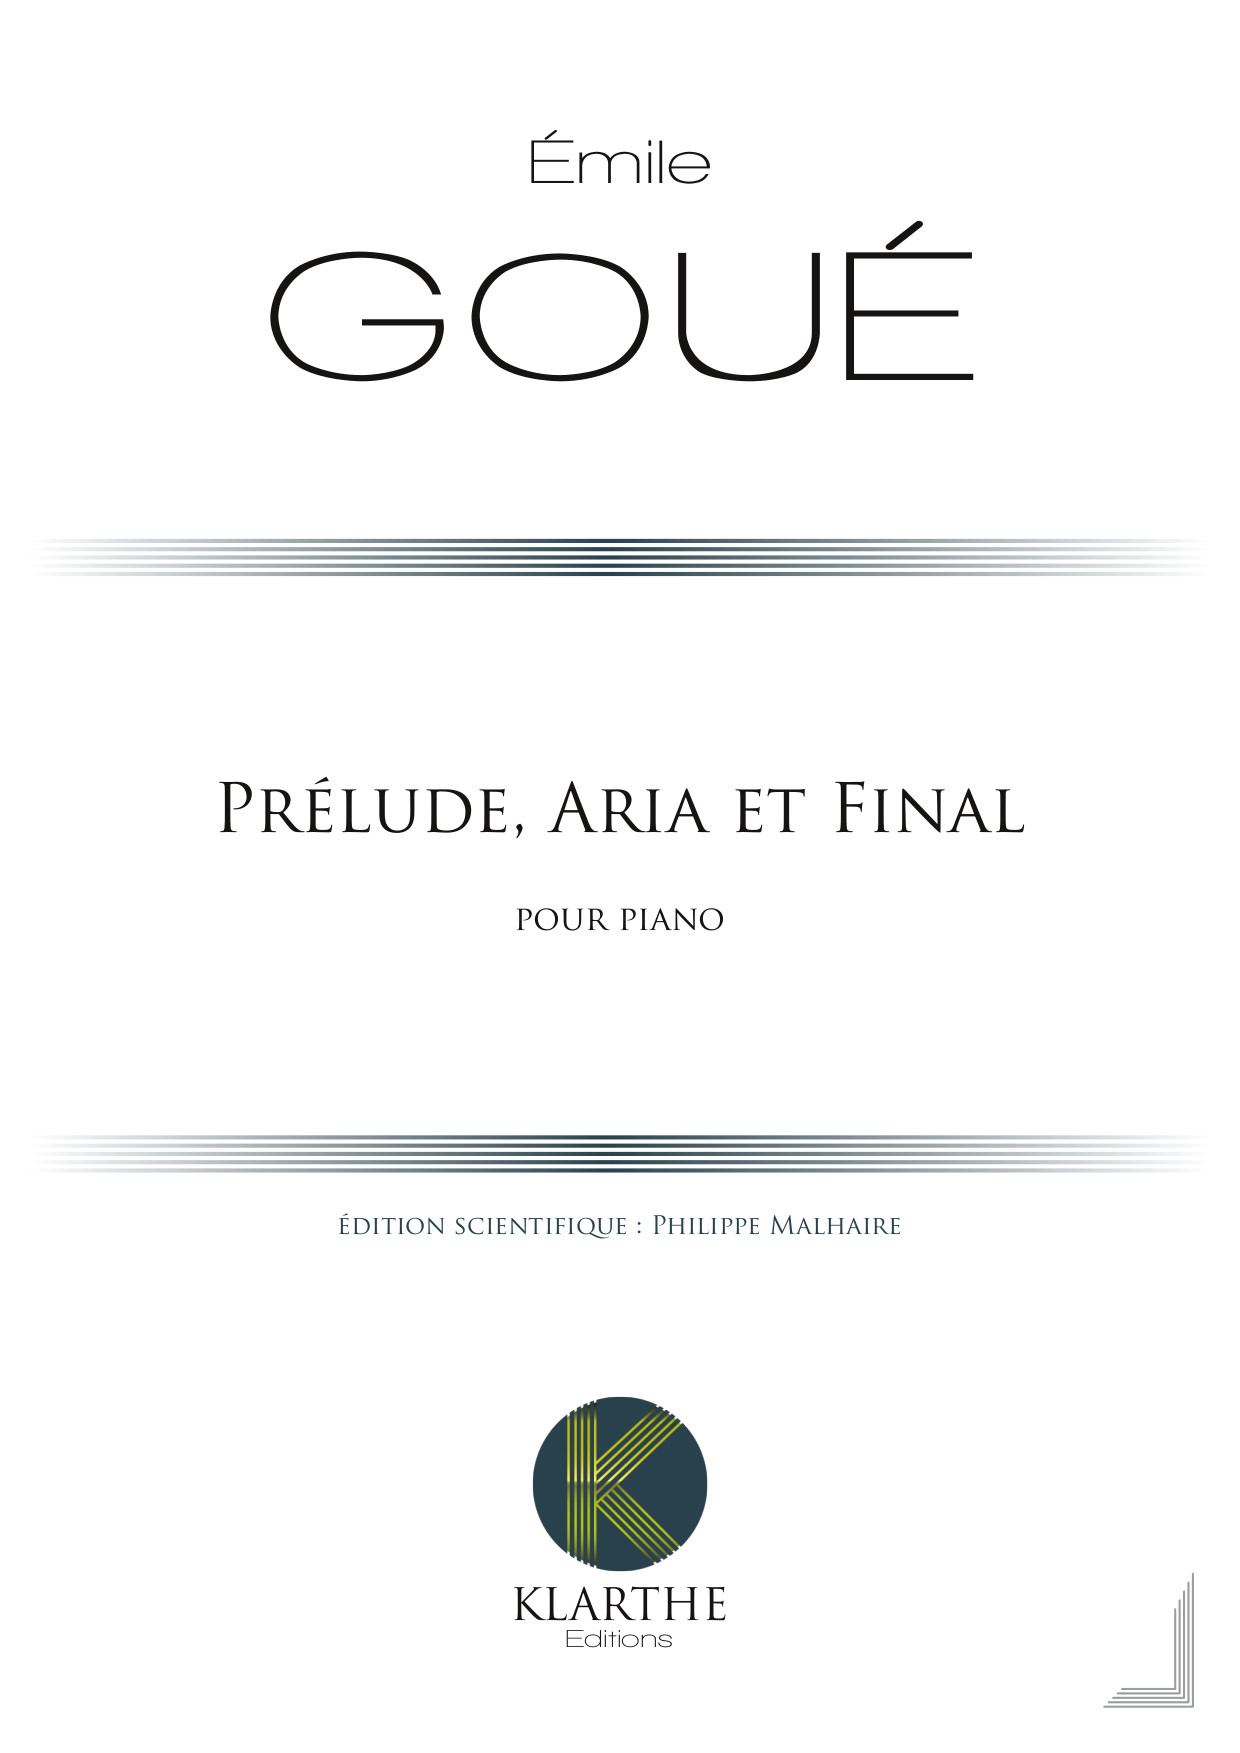 Pr�lude Aria et Final (GOUE EMILE)